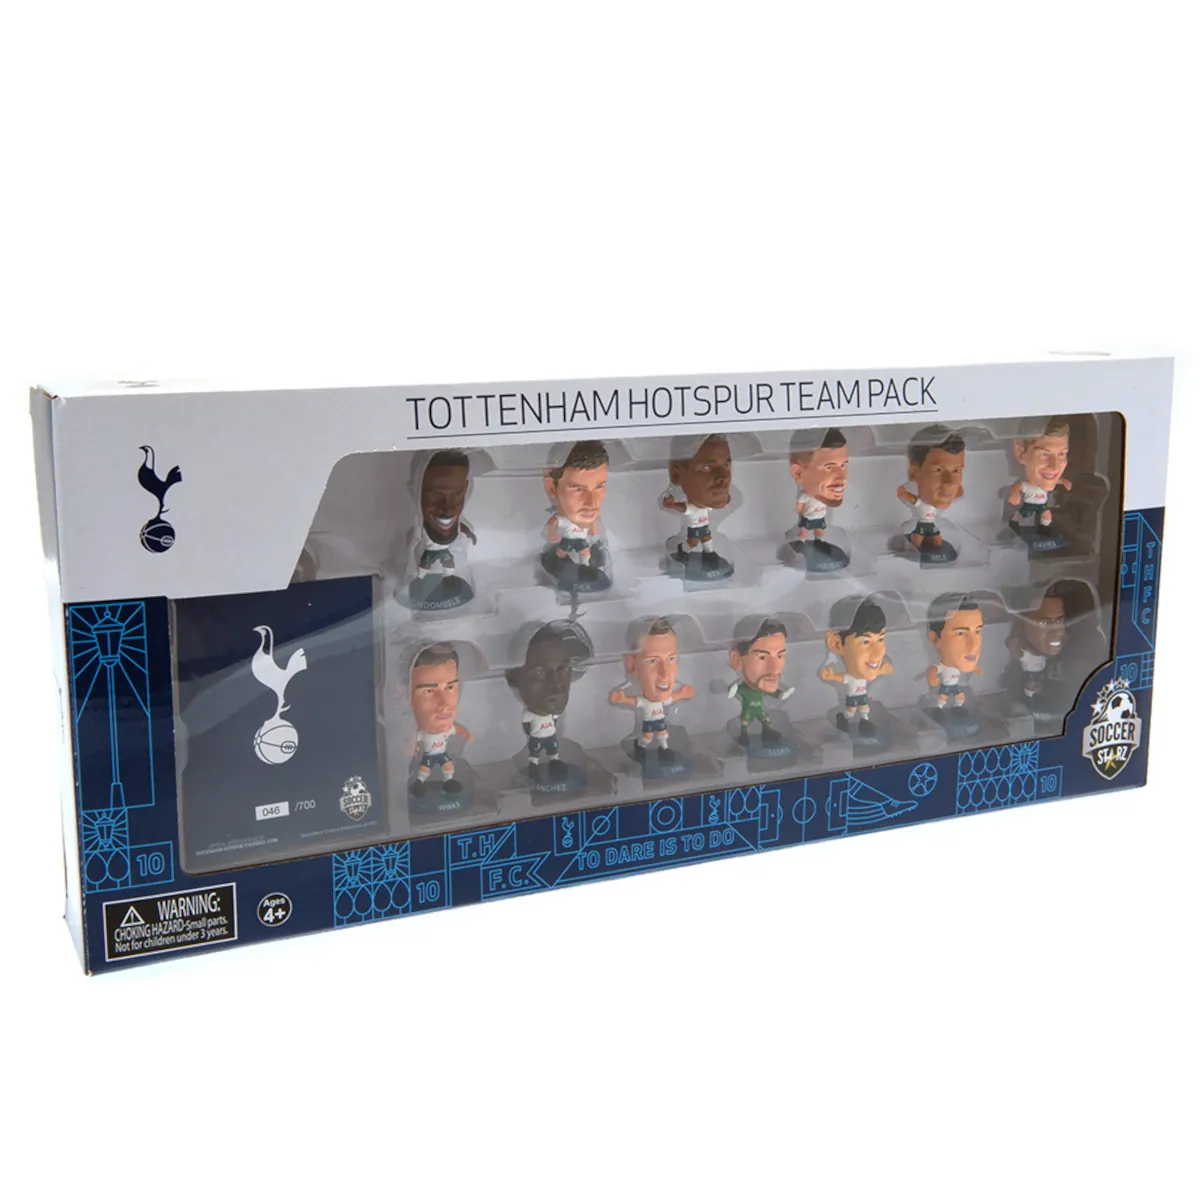 192833 Tottenham Hotspur FC SoccerStarz 13 Player Team Pack Collectable Figures Box